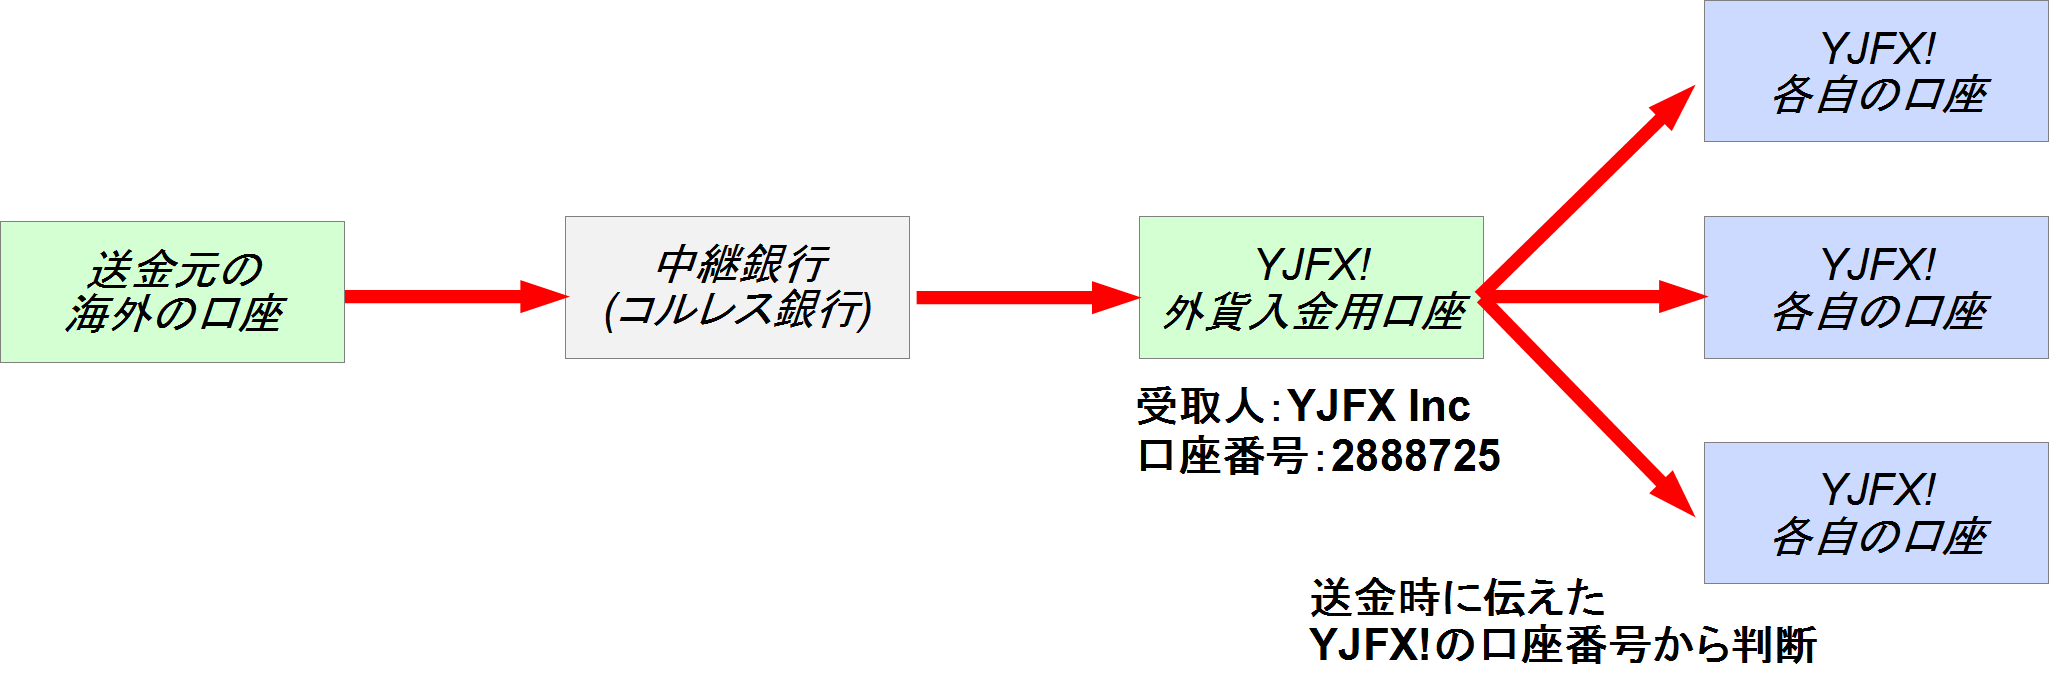 YJFX!の口座への外貨送金の仕組み